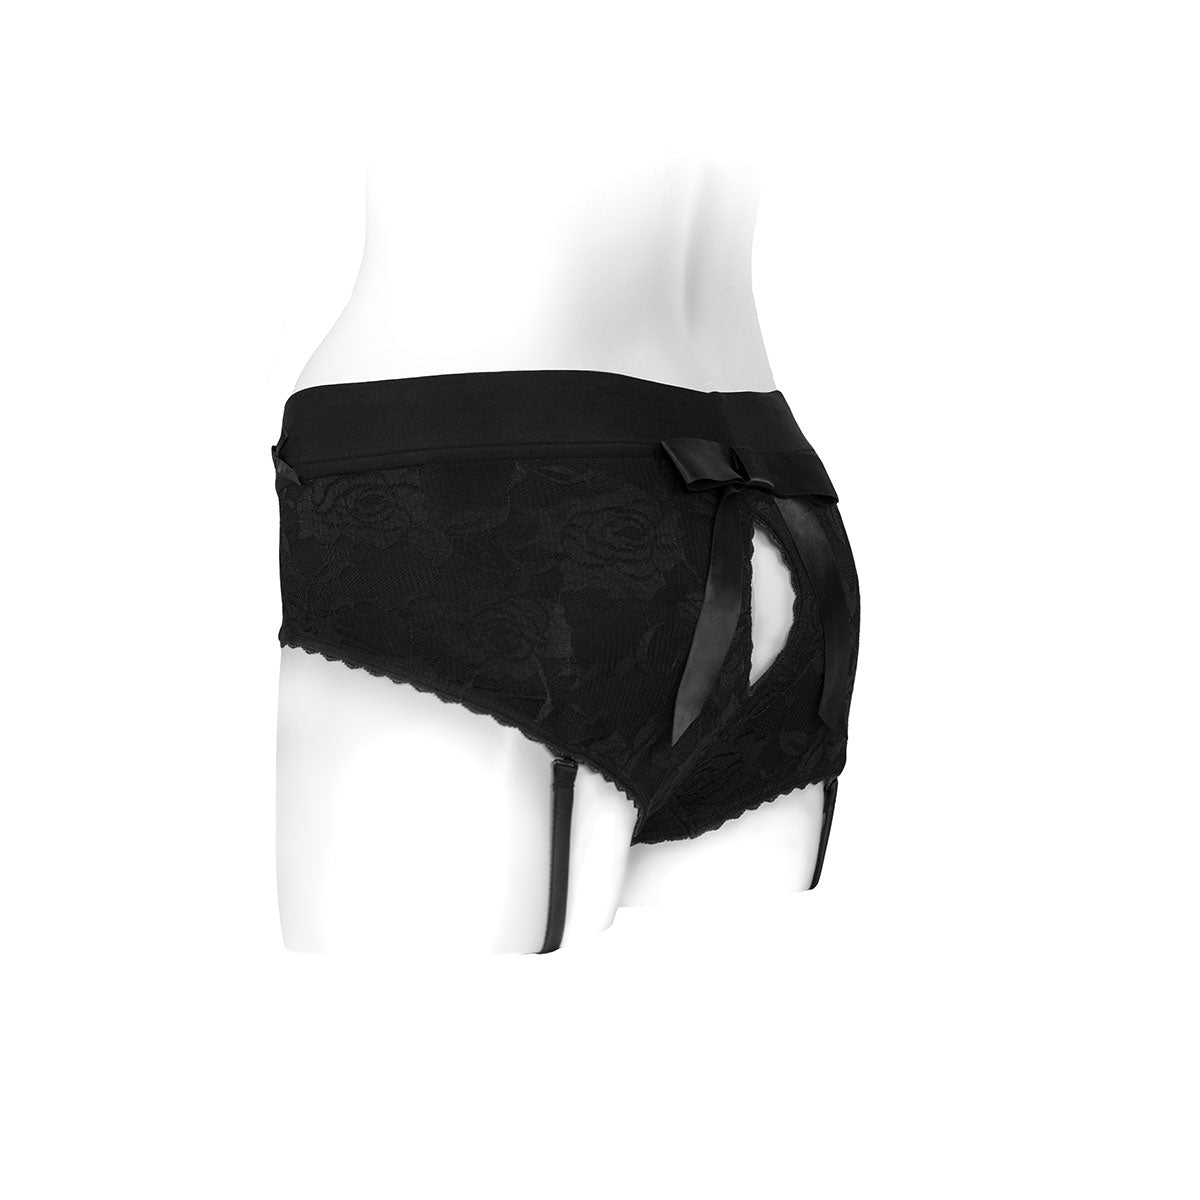 SpareParts Bella Harness Black-Black Nylon - Small Intimates Adult Boutique